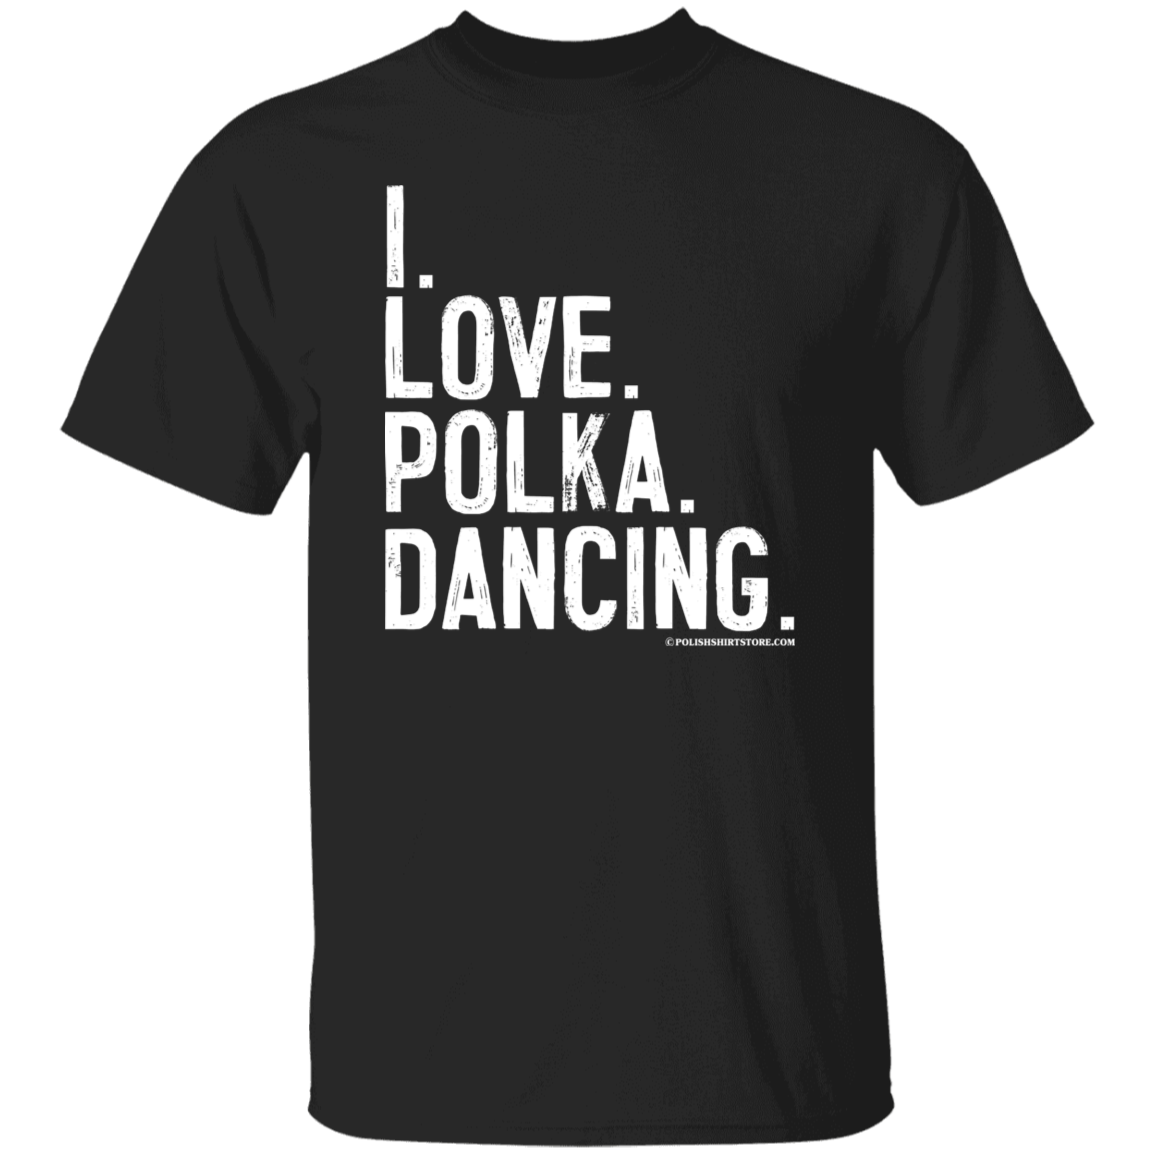 I Love Polka Dancing Apparel CustomCat G500 5.3 oz. T-Shirt Black S